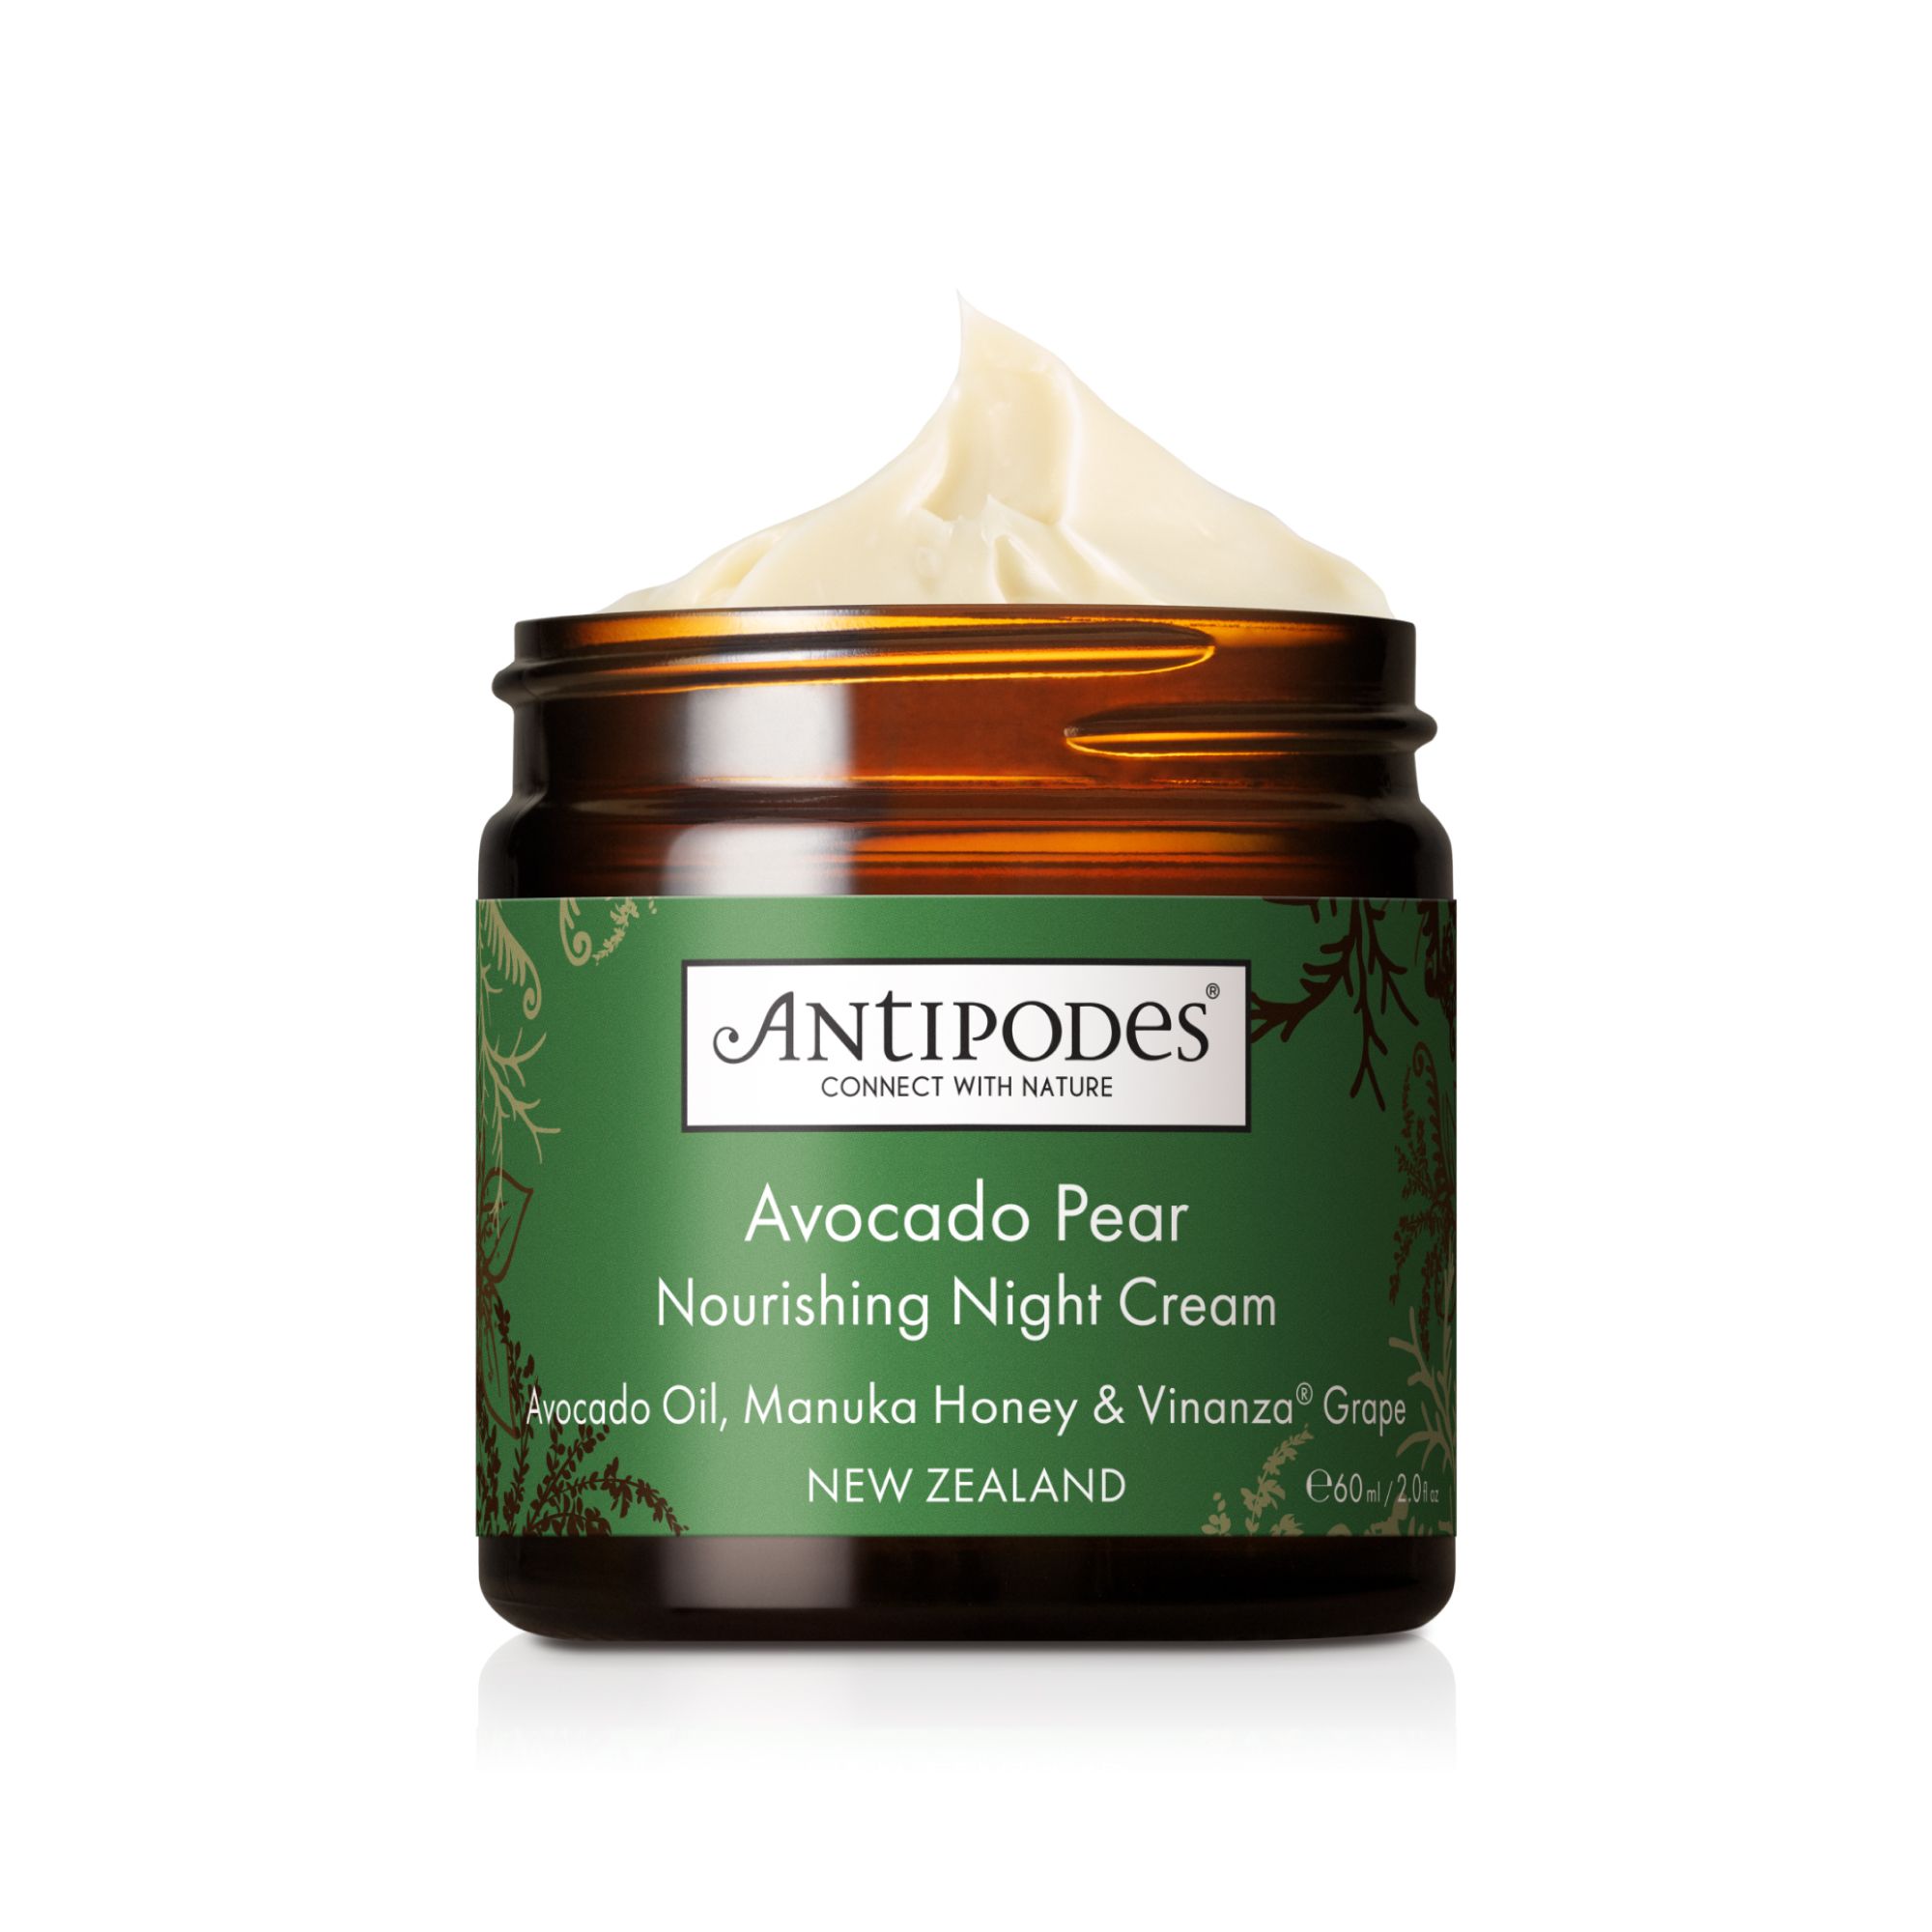 Antipodes Natural Avocado Pear Nourishing Night Cream - 60ml